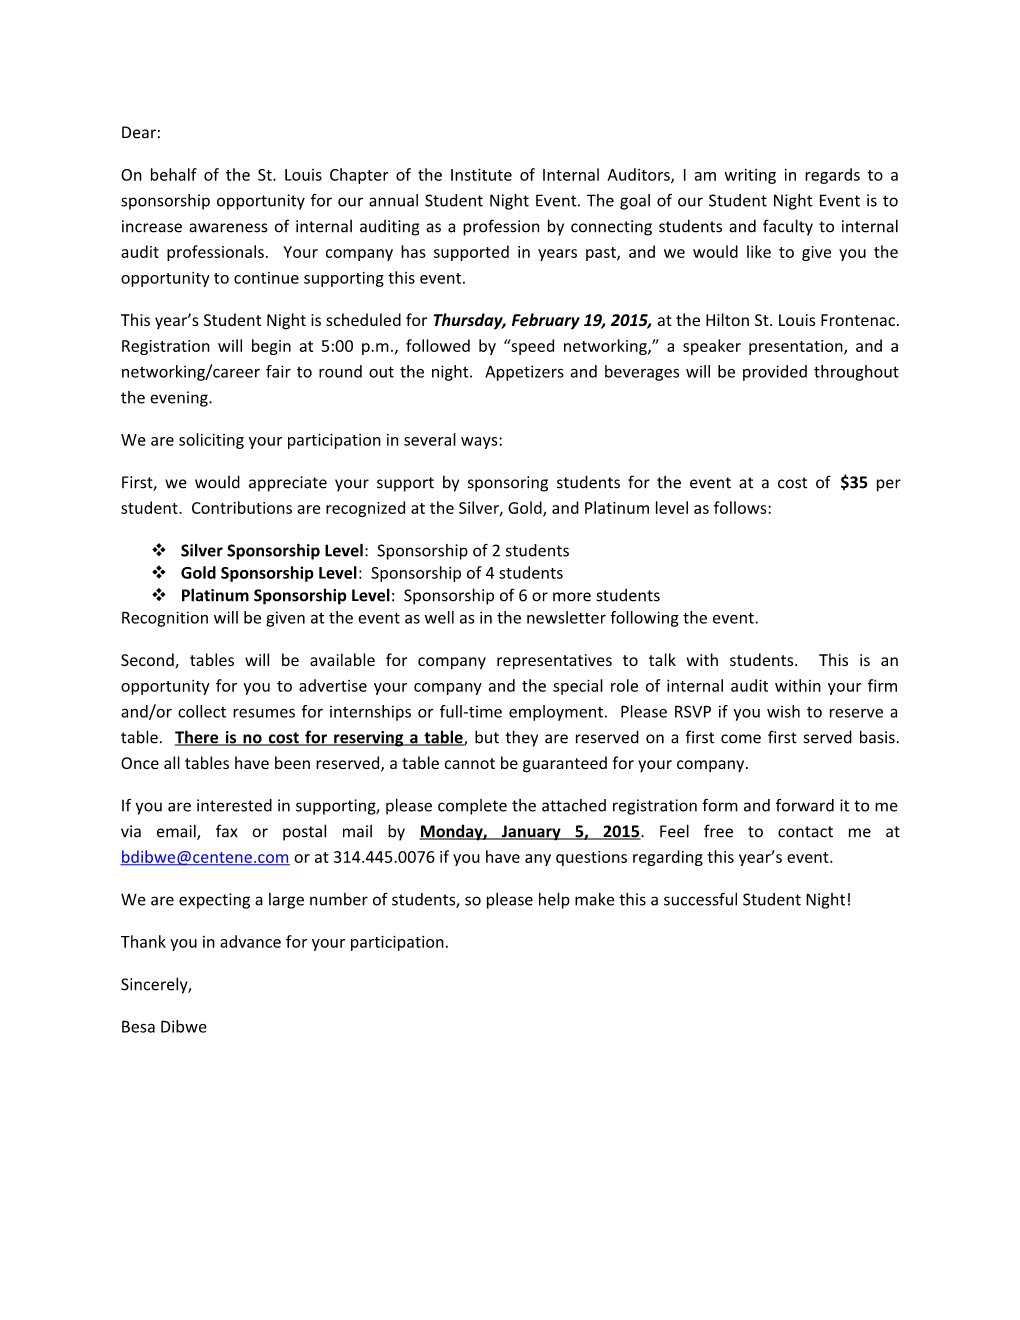 2015 Student Night Sponsorship Request Letter